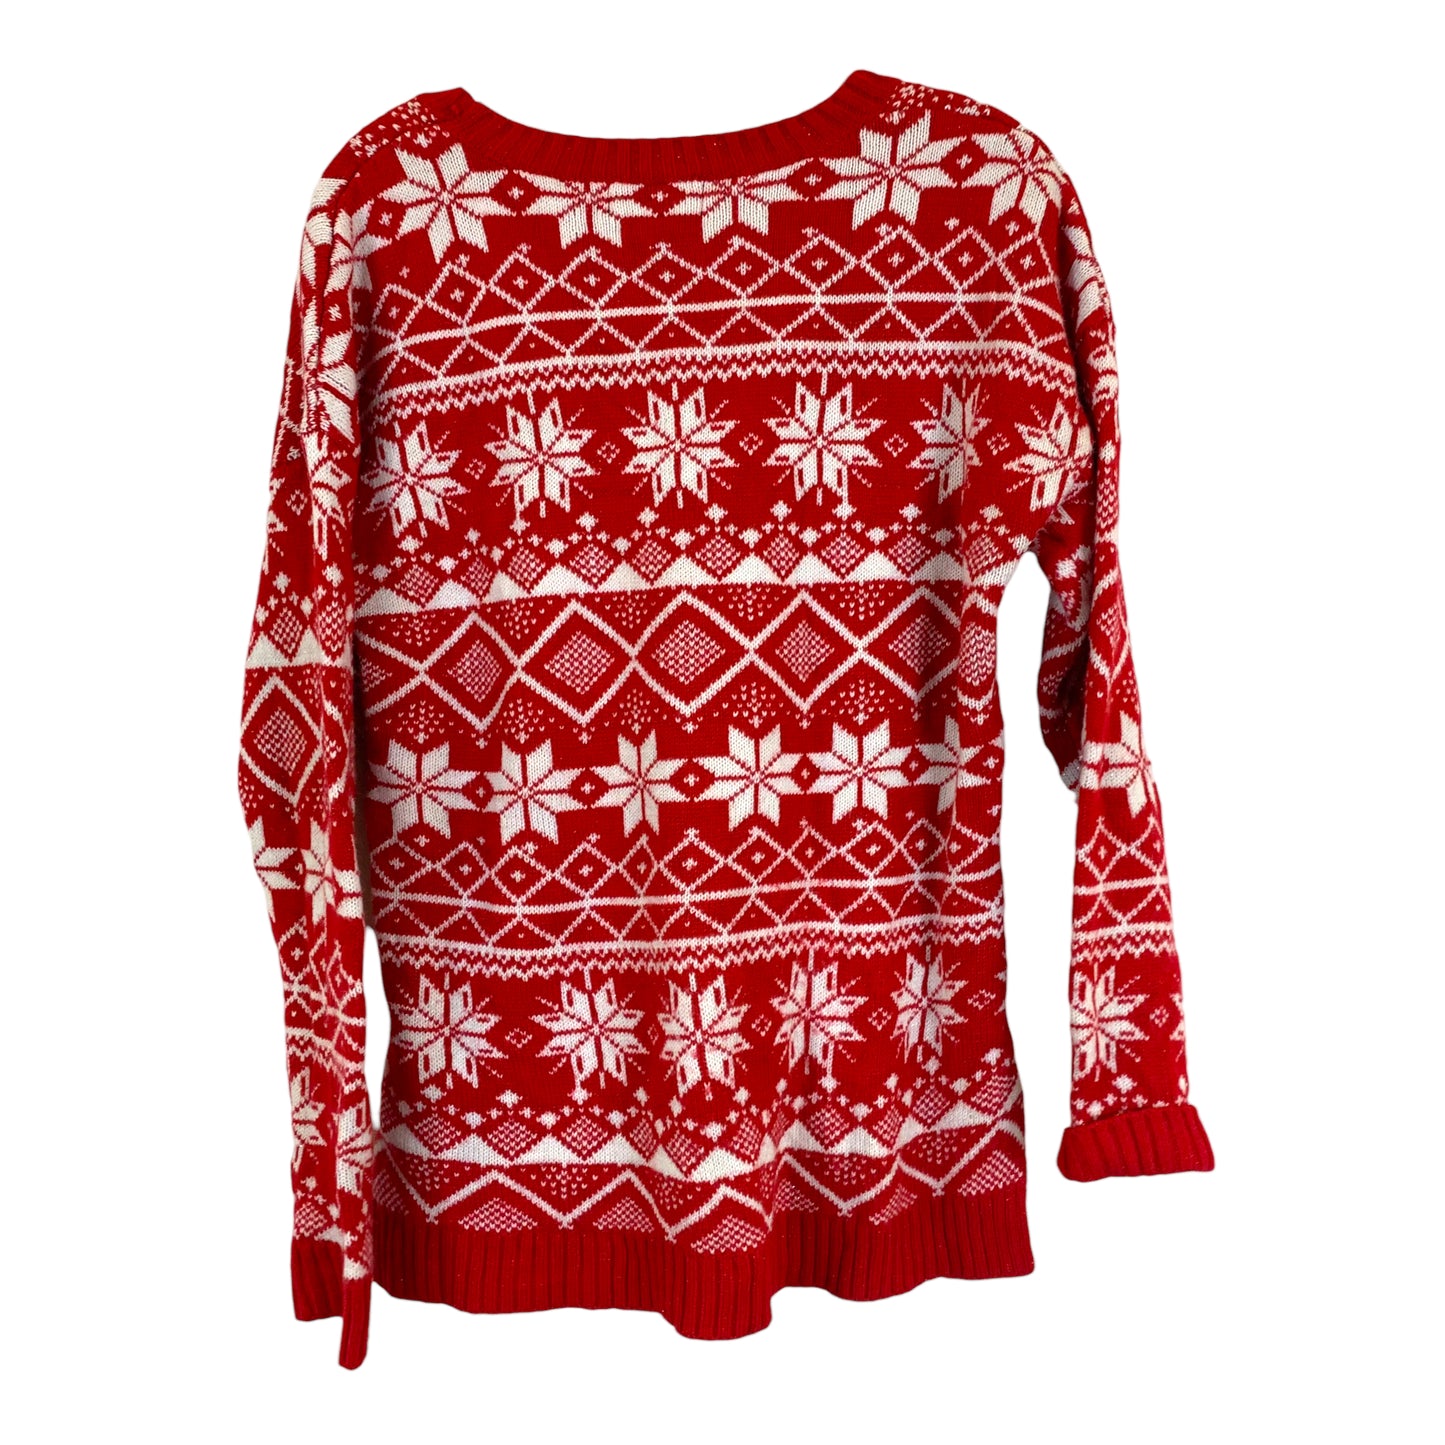 Sweater By Blizzard Bay  Size: L